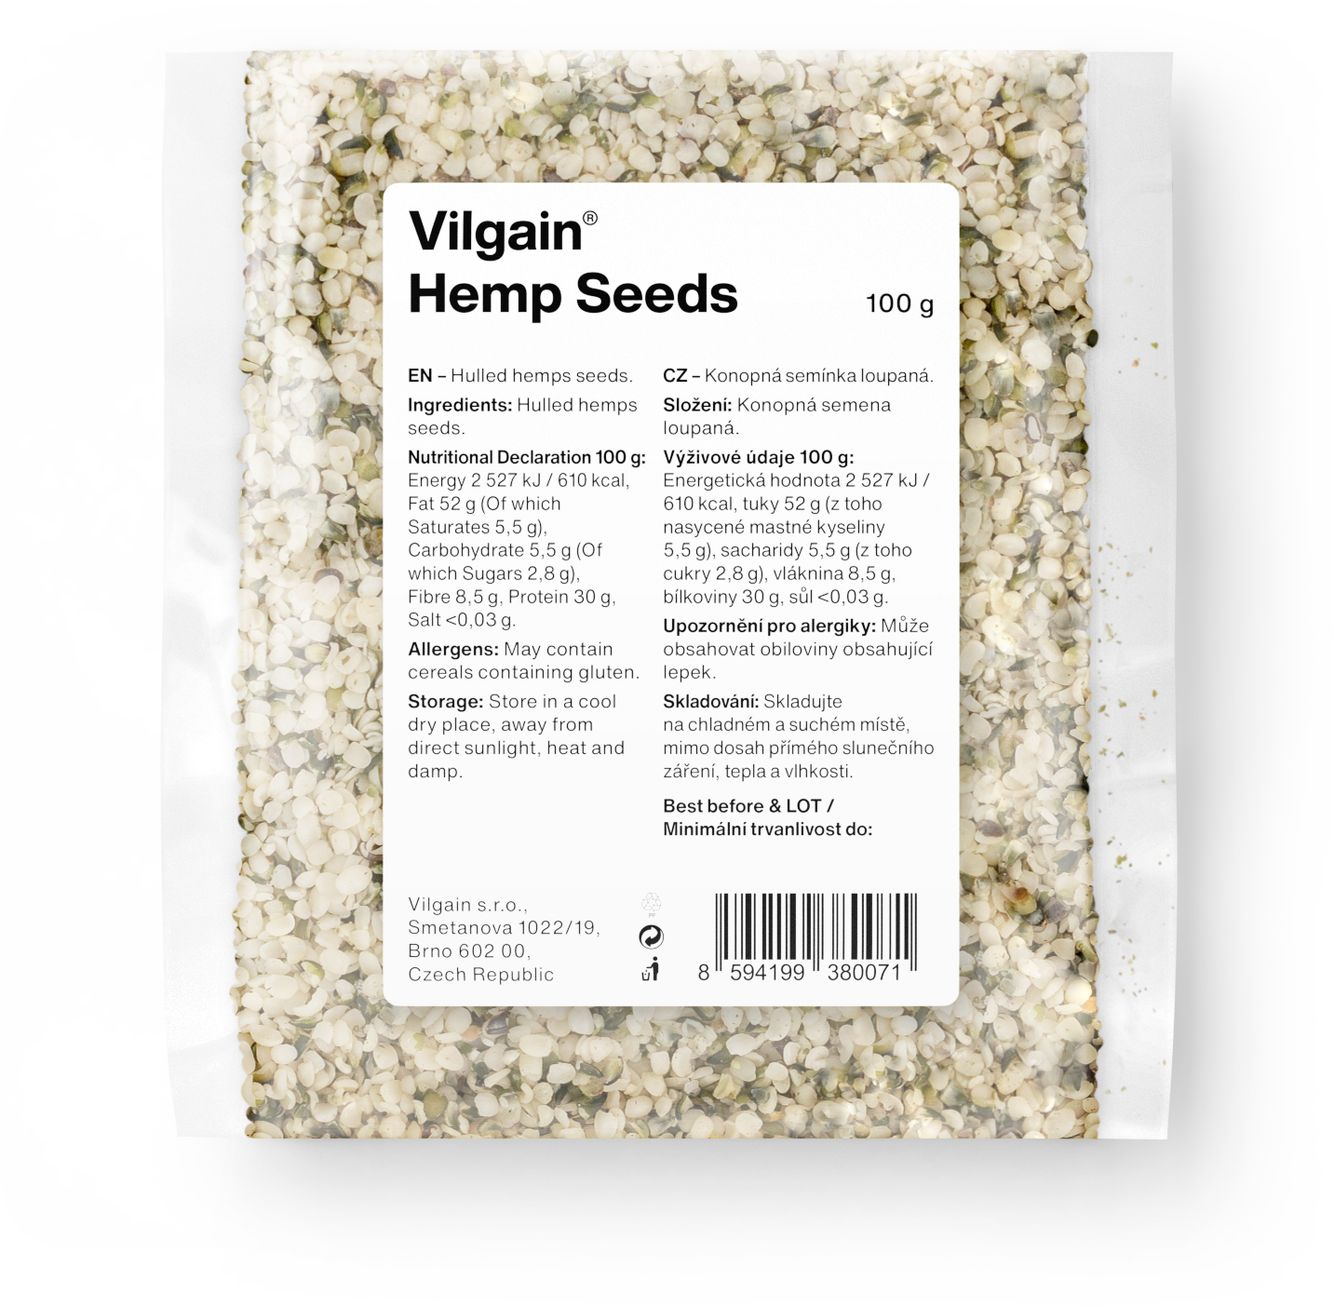 Vilgain Hemp seeds